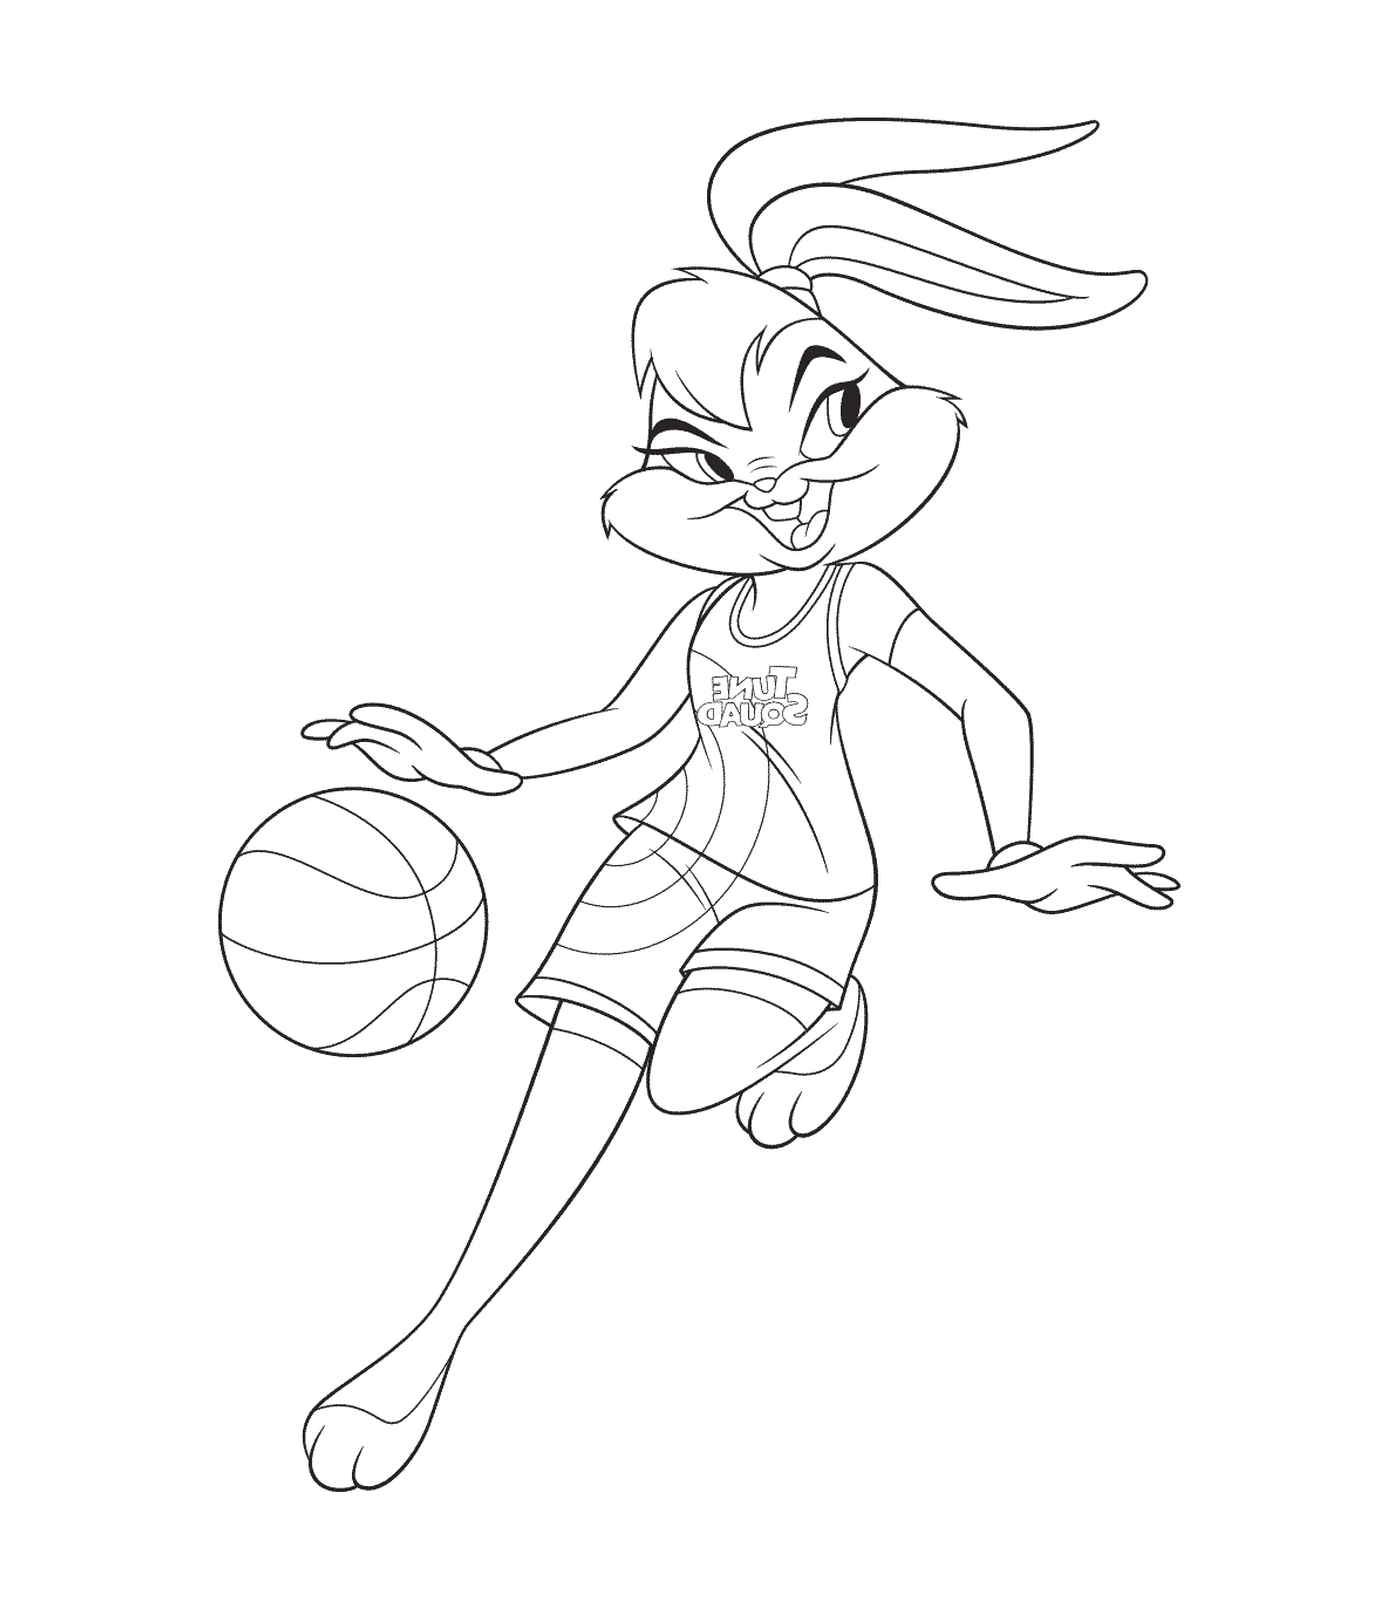  Rabbit playing basketball 